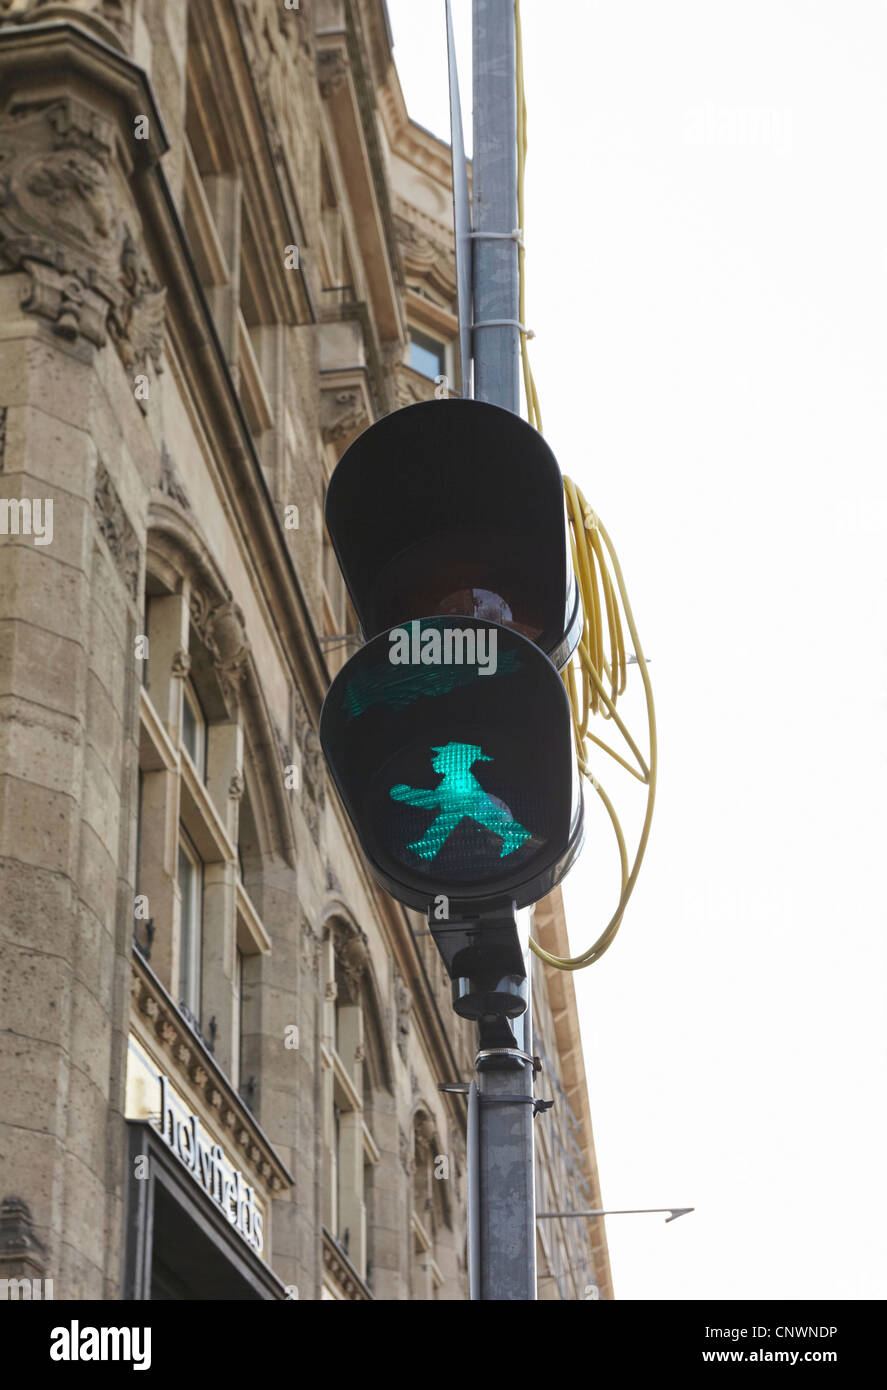 Berlin green walking man traffic signal Stock Photo